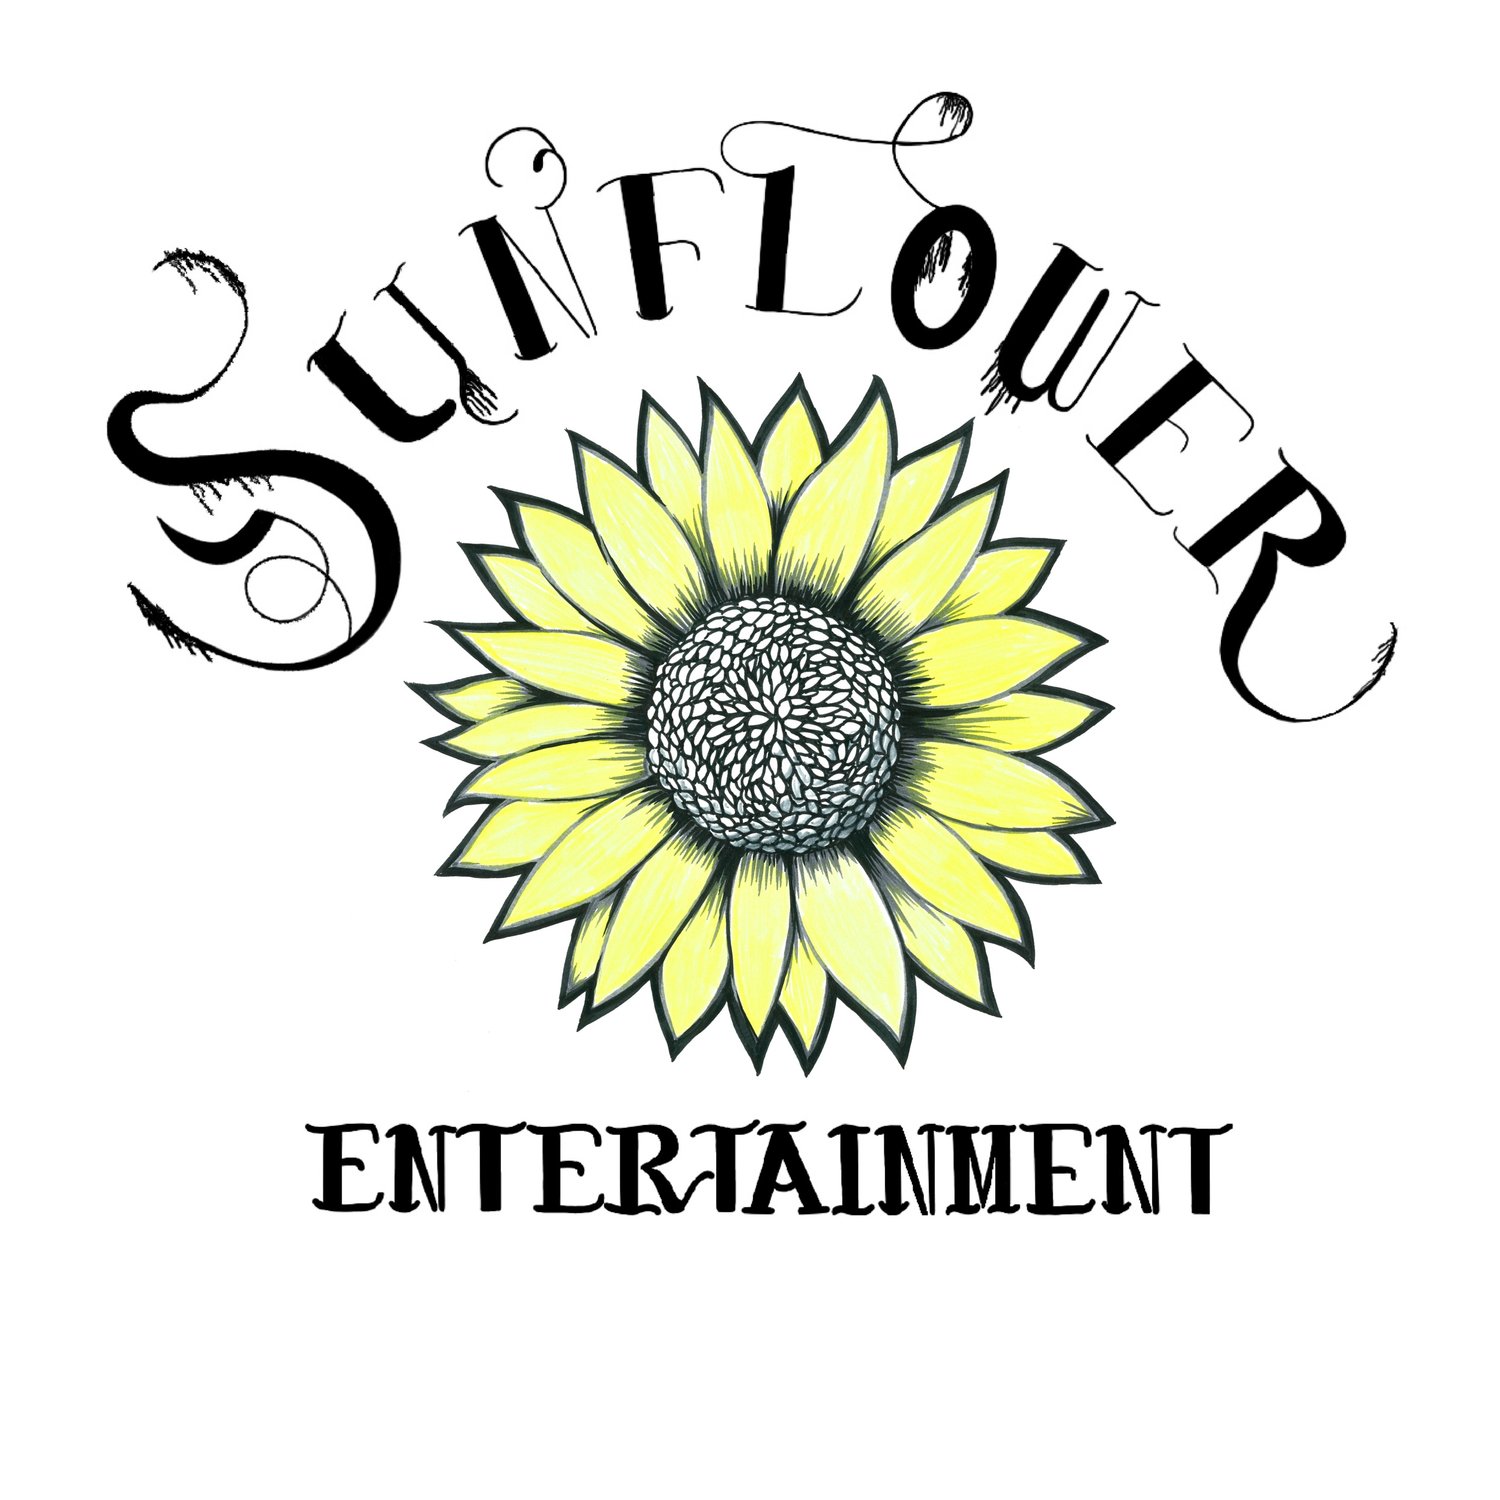 Sunflower Entertainment